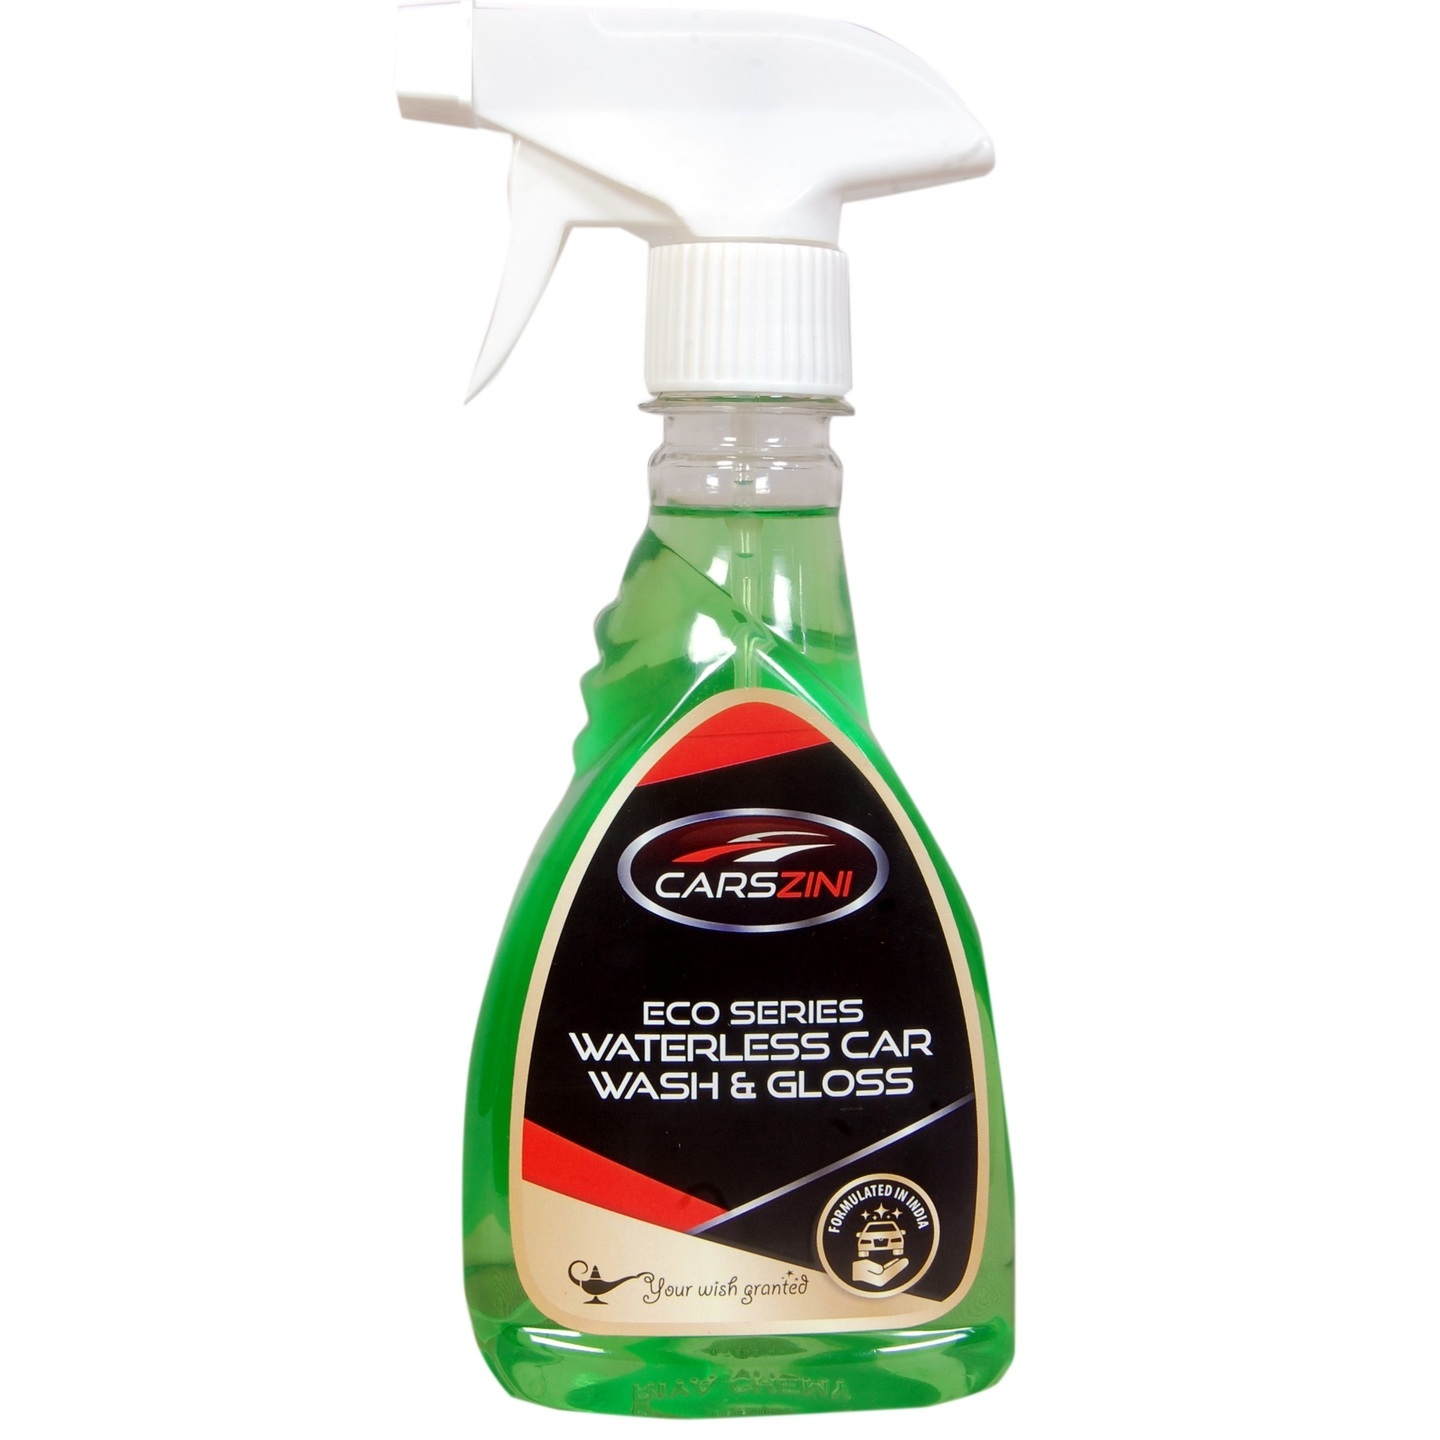 CARSZINI Waterless Car Wash & Gloss 330 ml